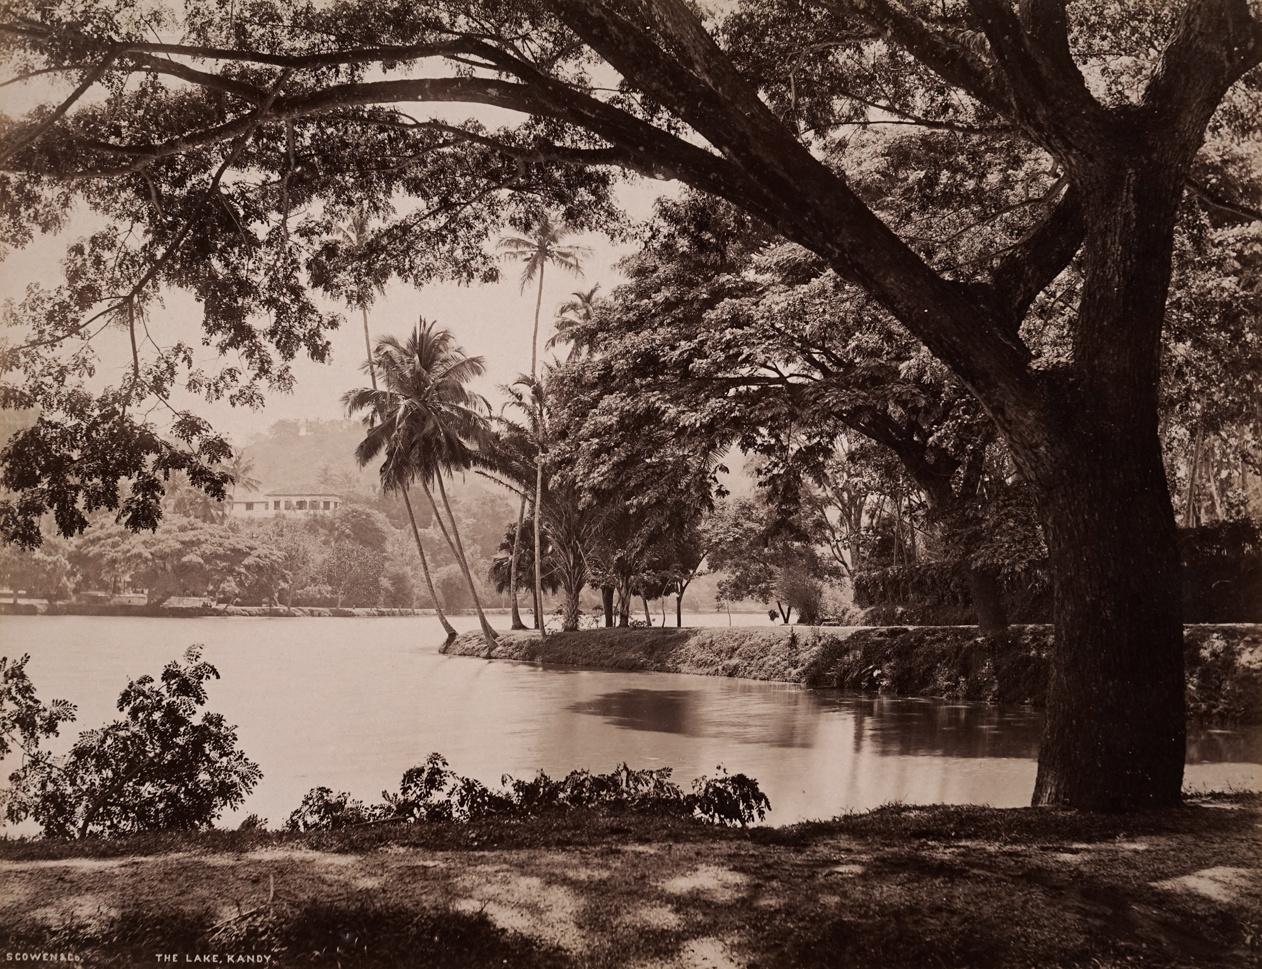 Charles Scowen Landscape Photograph - The Lake Kandy, 1880